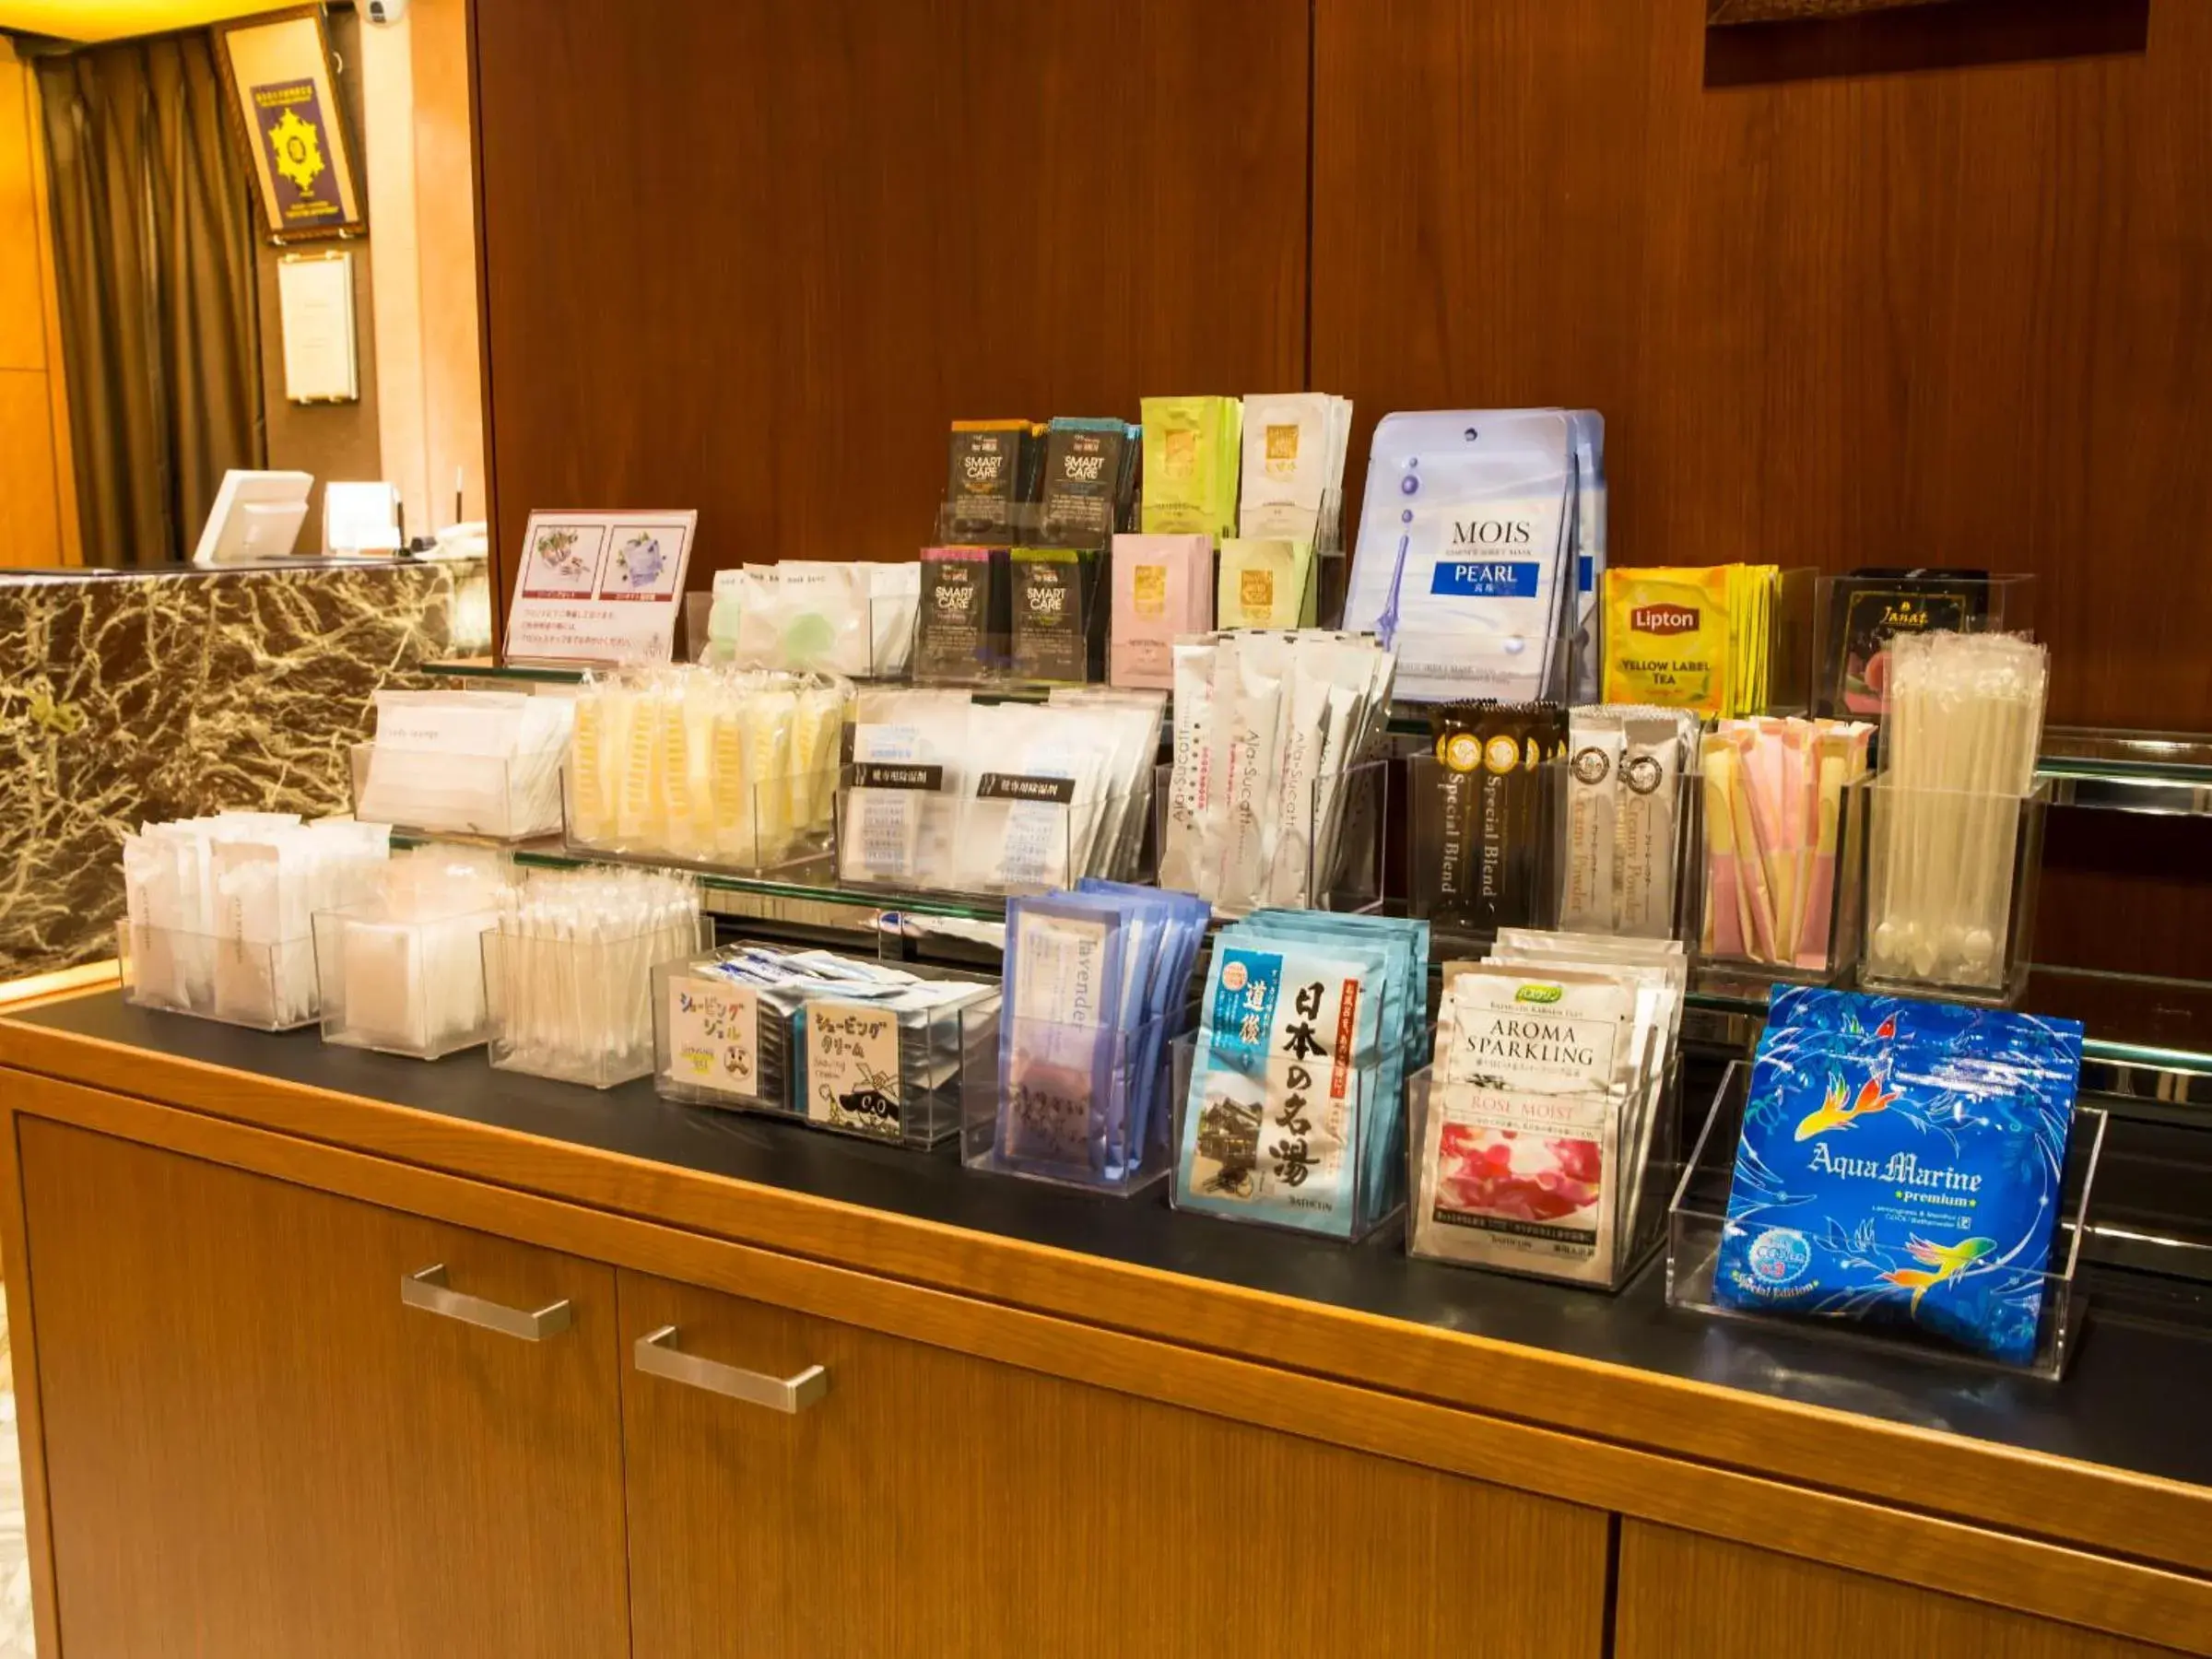 Lobby or reception in Hotel Nihonbashi Saibo